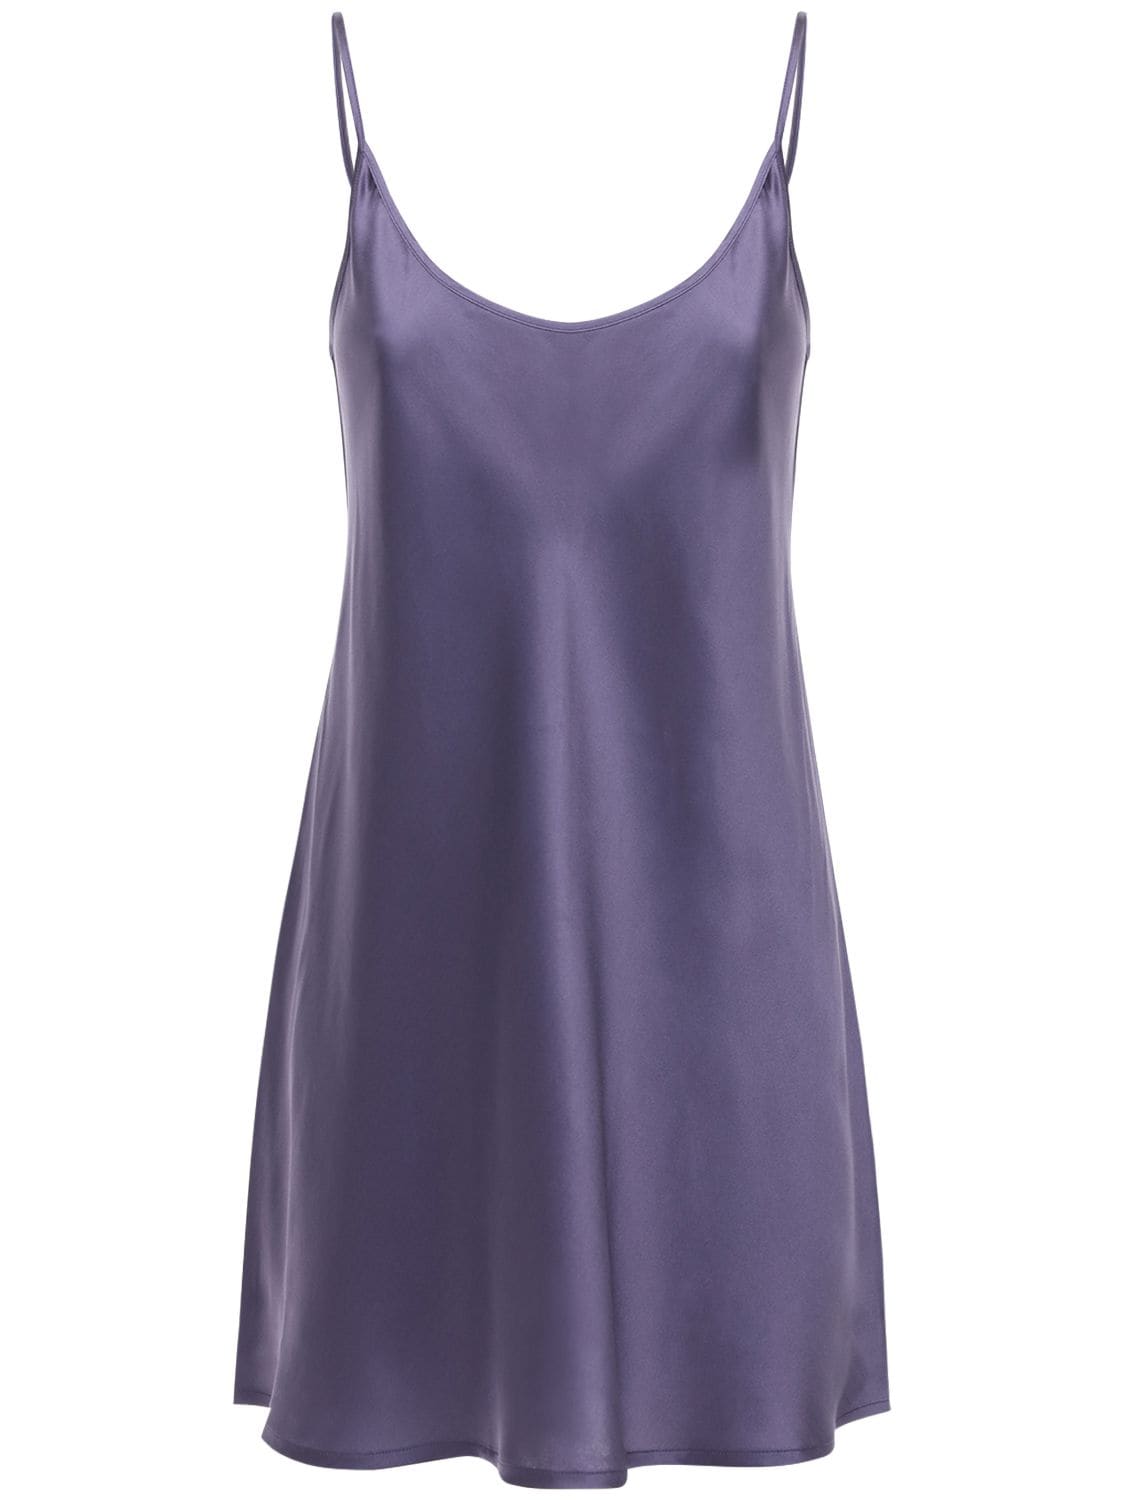 la perla purple dress